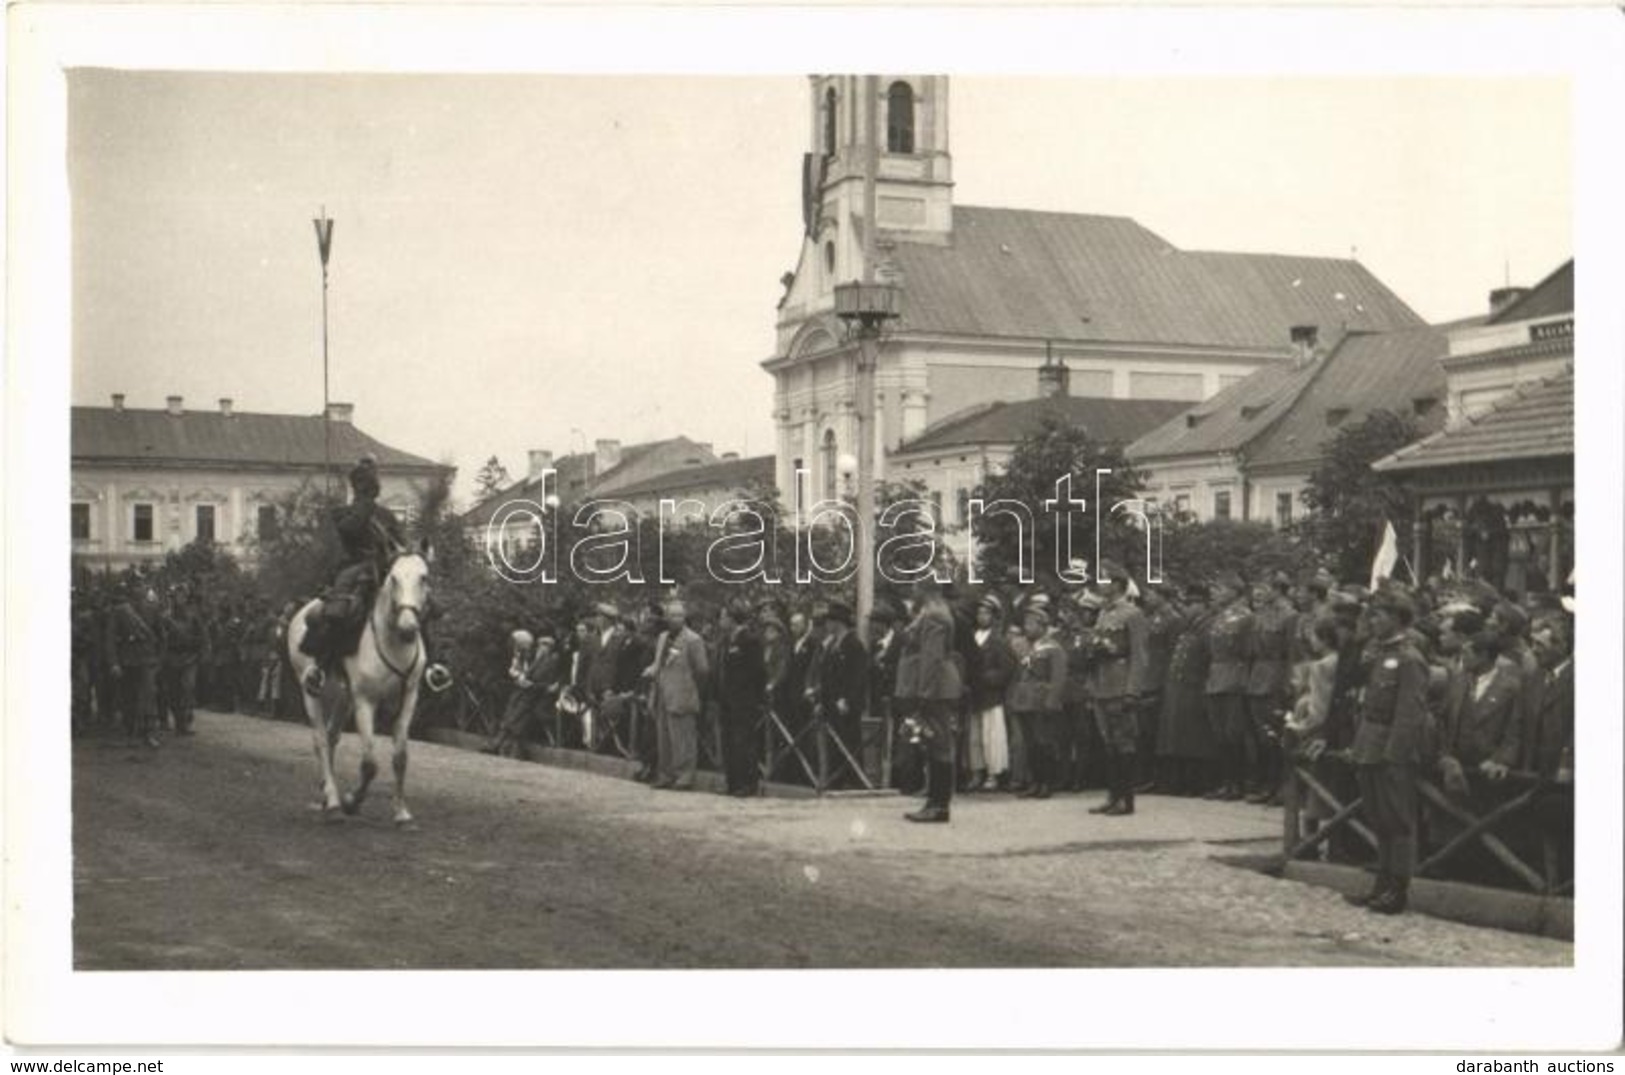 * T1/T2 1940 Máramarossziget, Sighetu Marmatiei; Bevonulás / Entry Of The Hungarian Troops. Photo - Non Classés